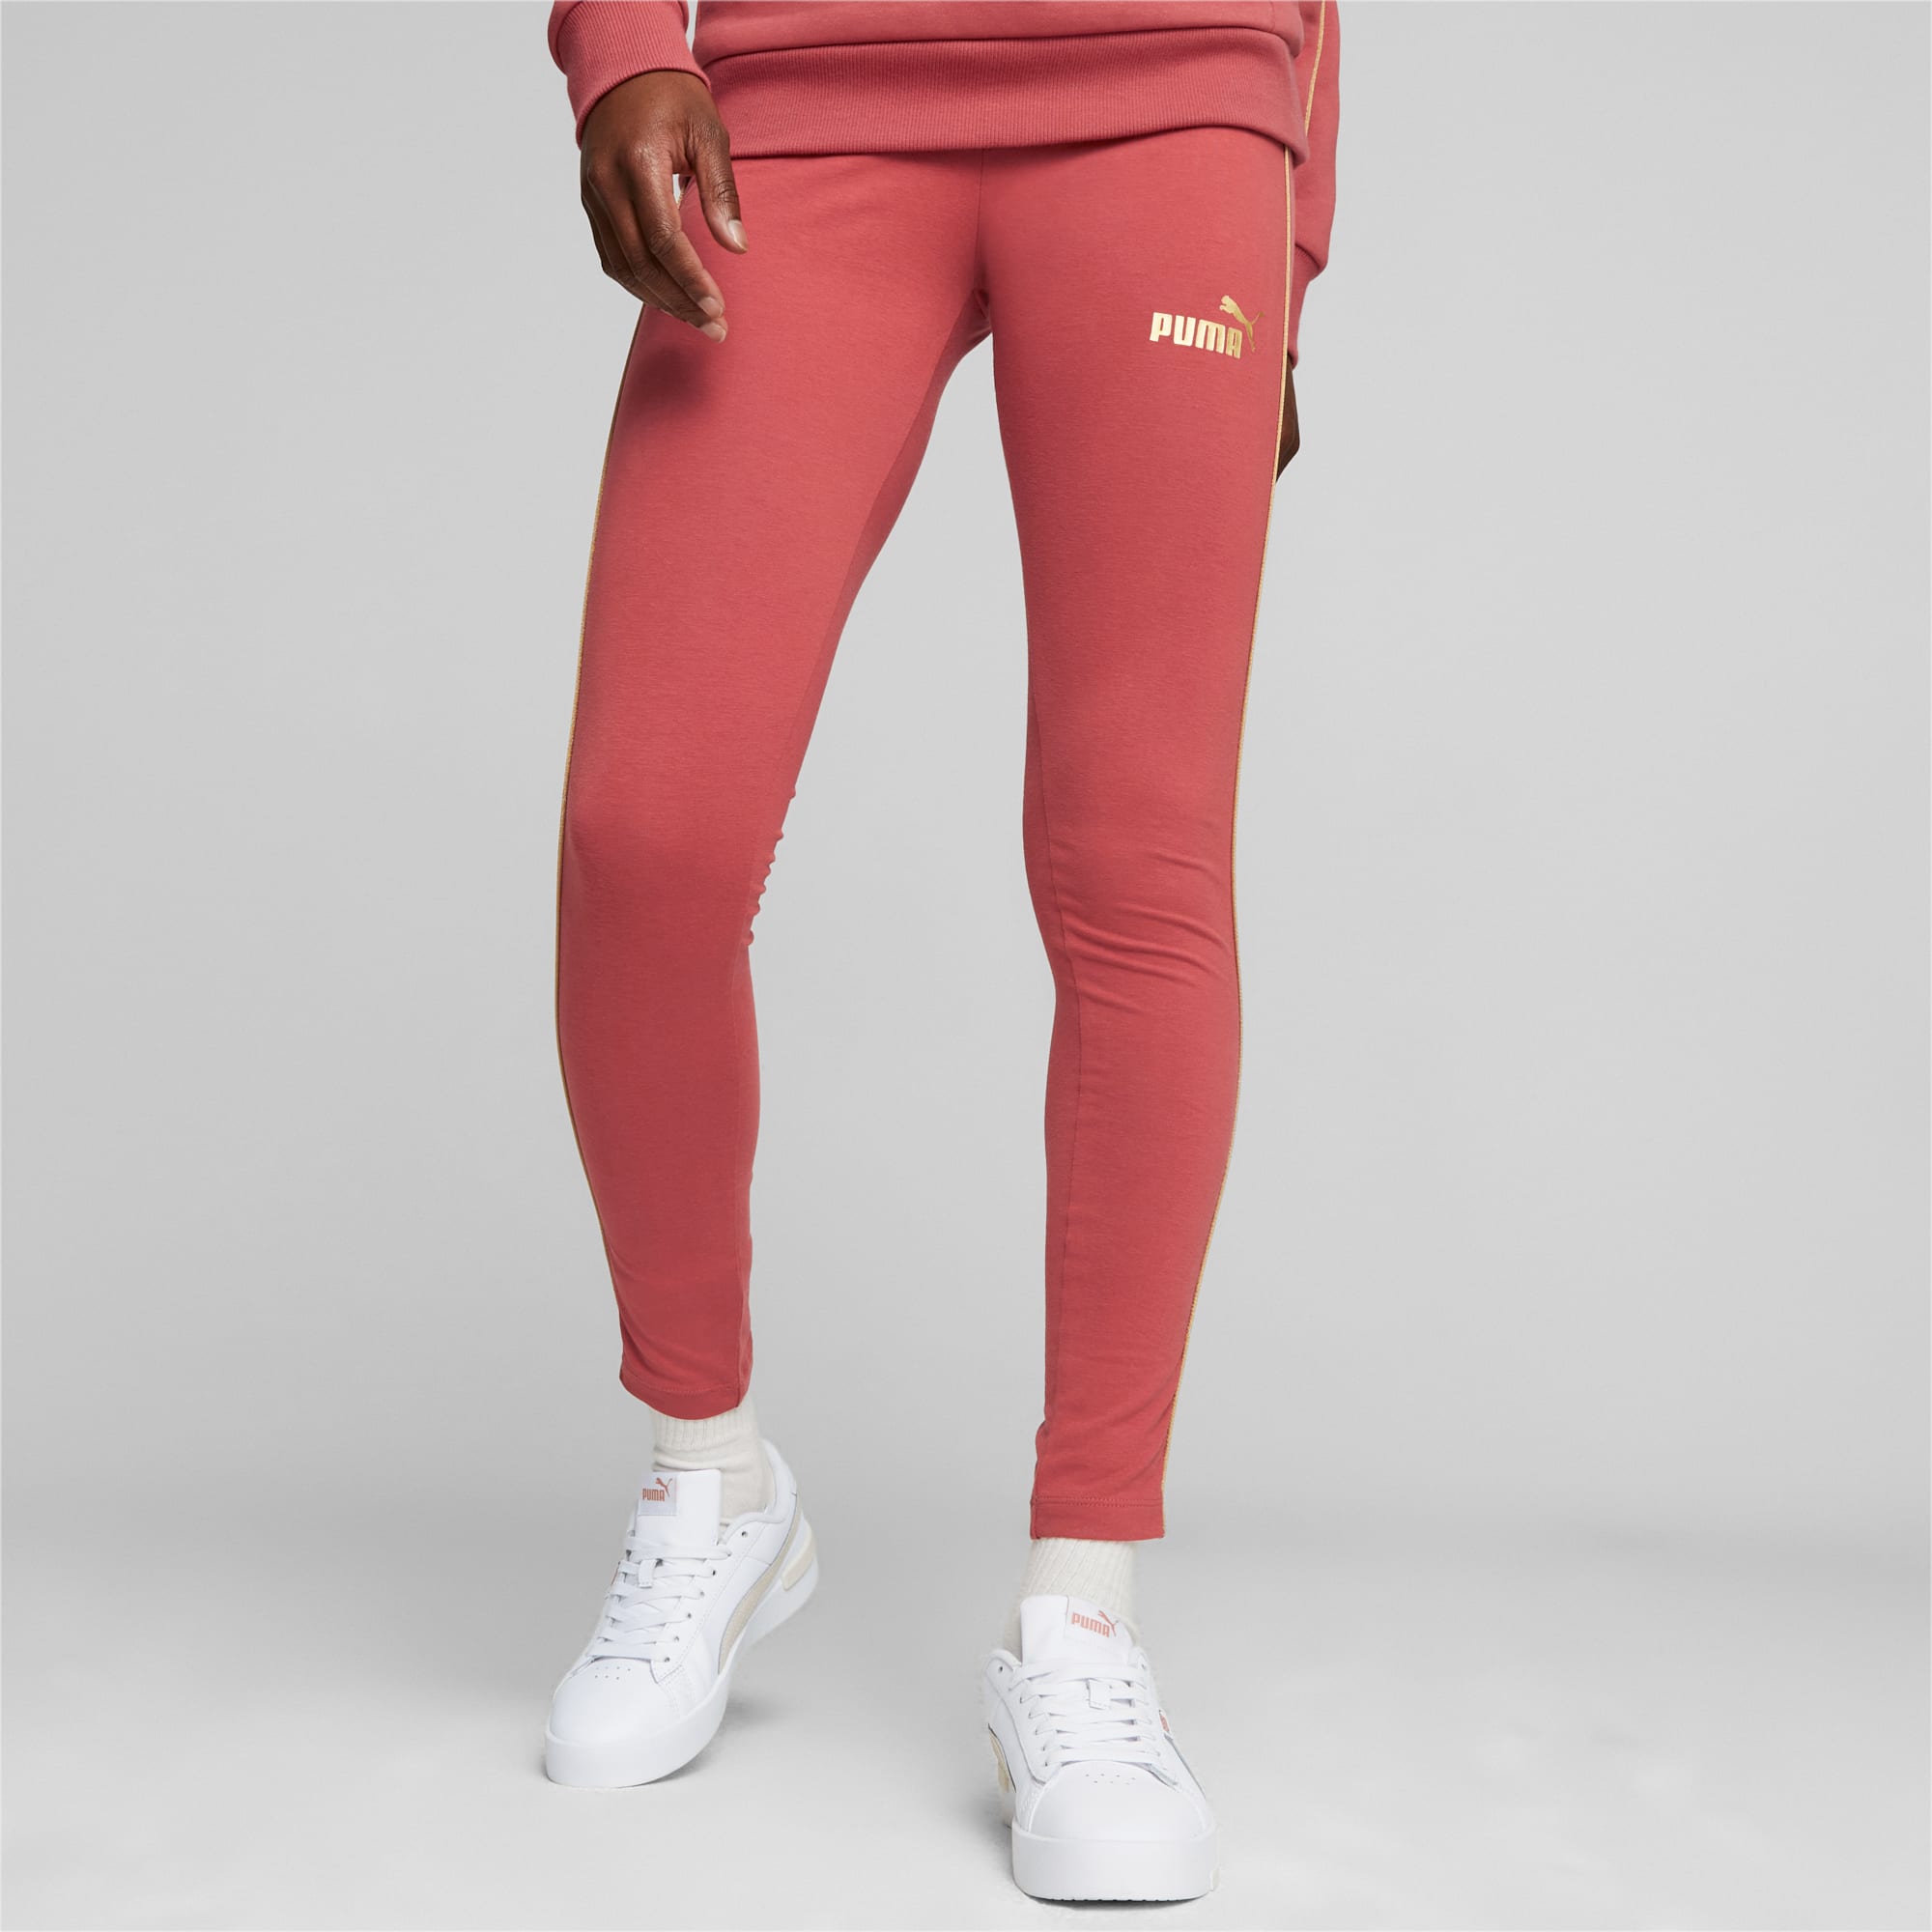 PUMA Ess+ Minimal Gold Women's Leggings, Astro Red, Size S, Clothing